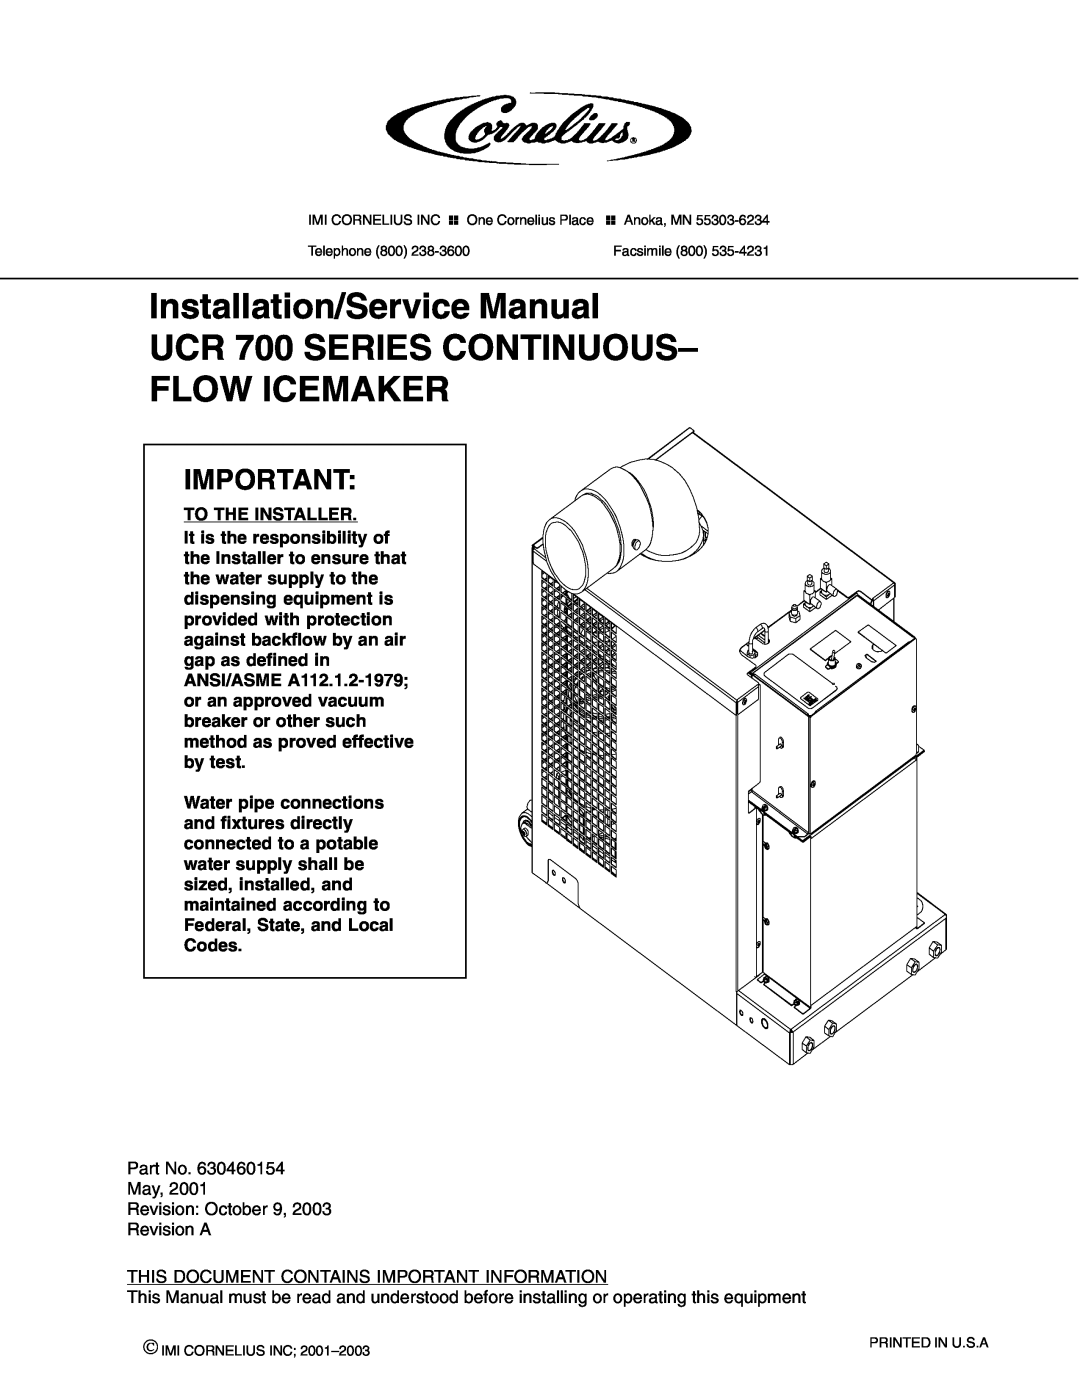 Cornelius UCR 700 Series service manual To The Installer 